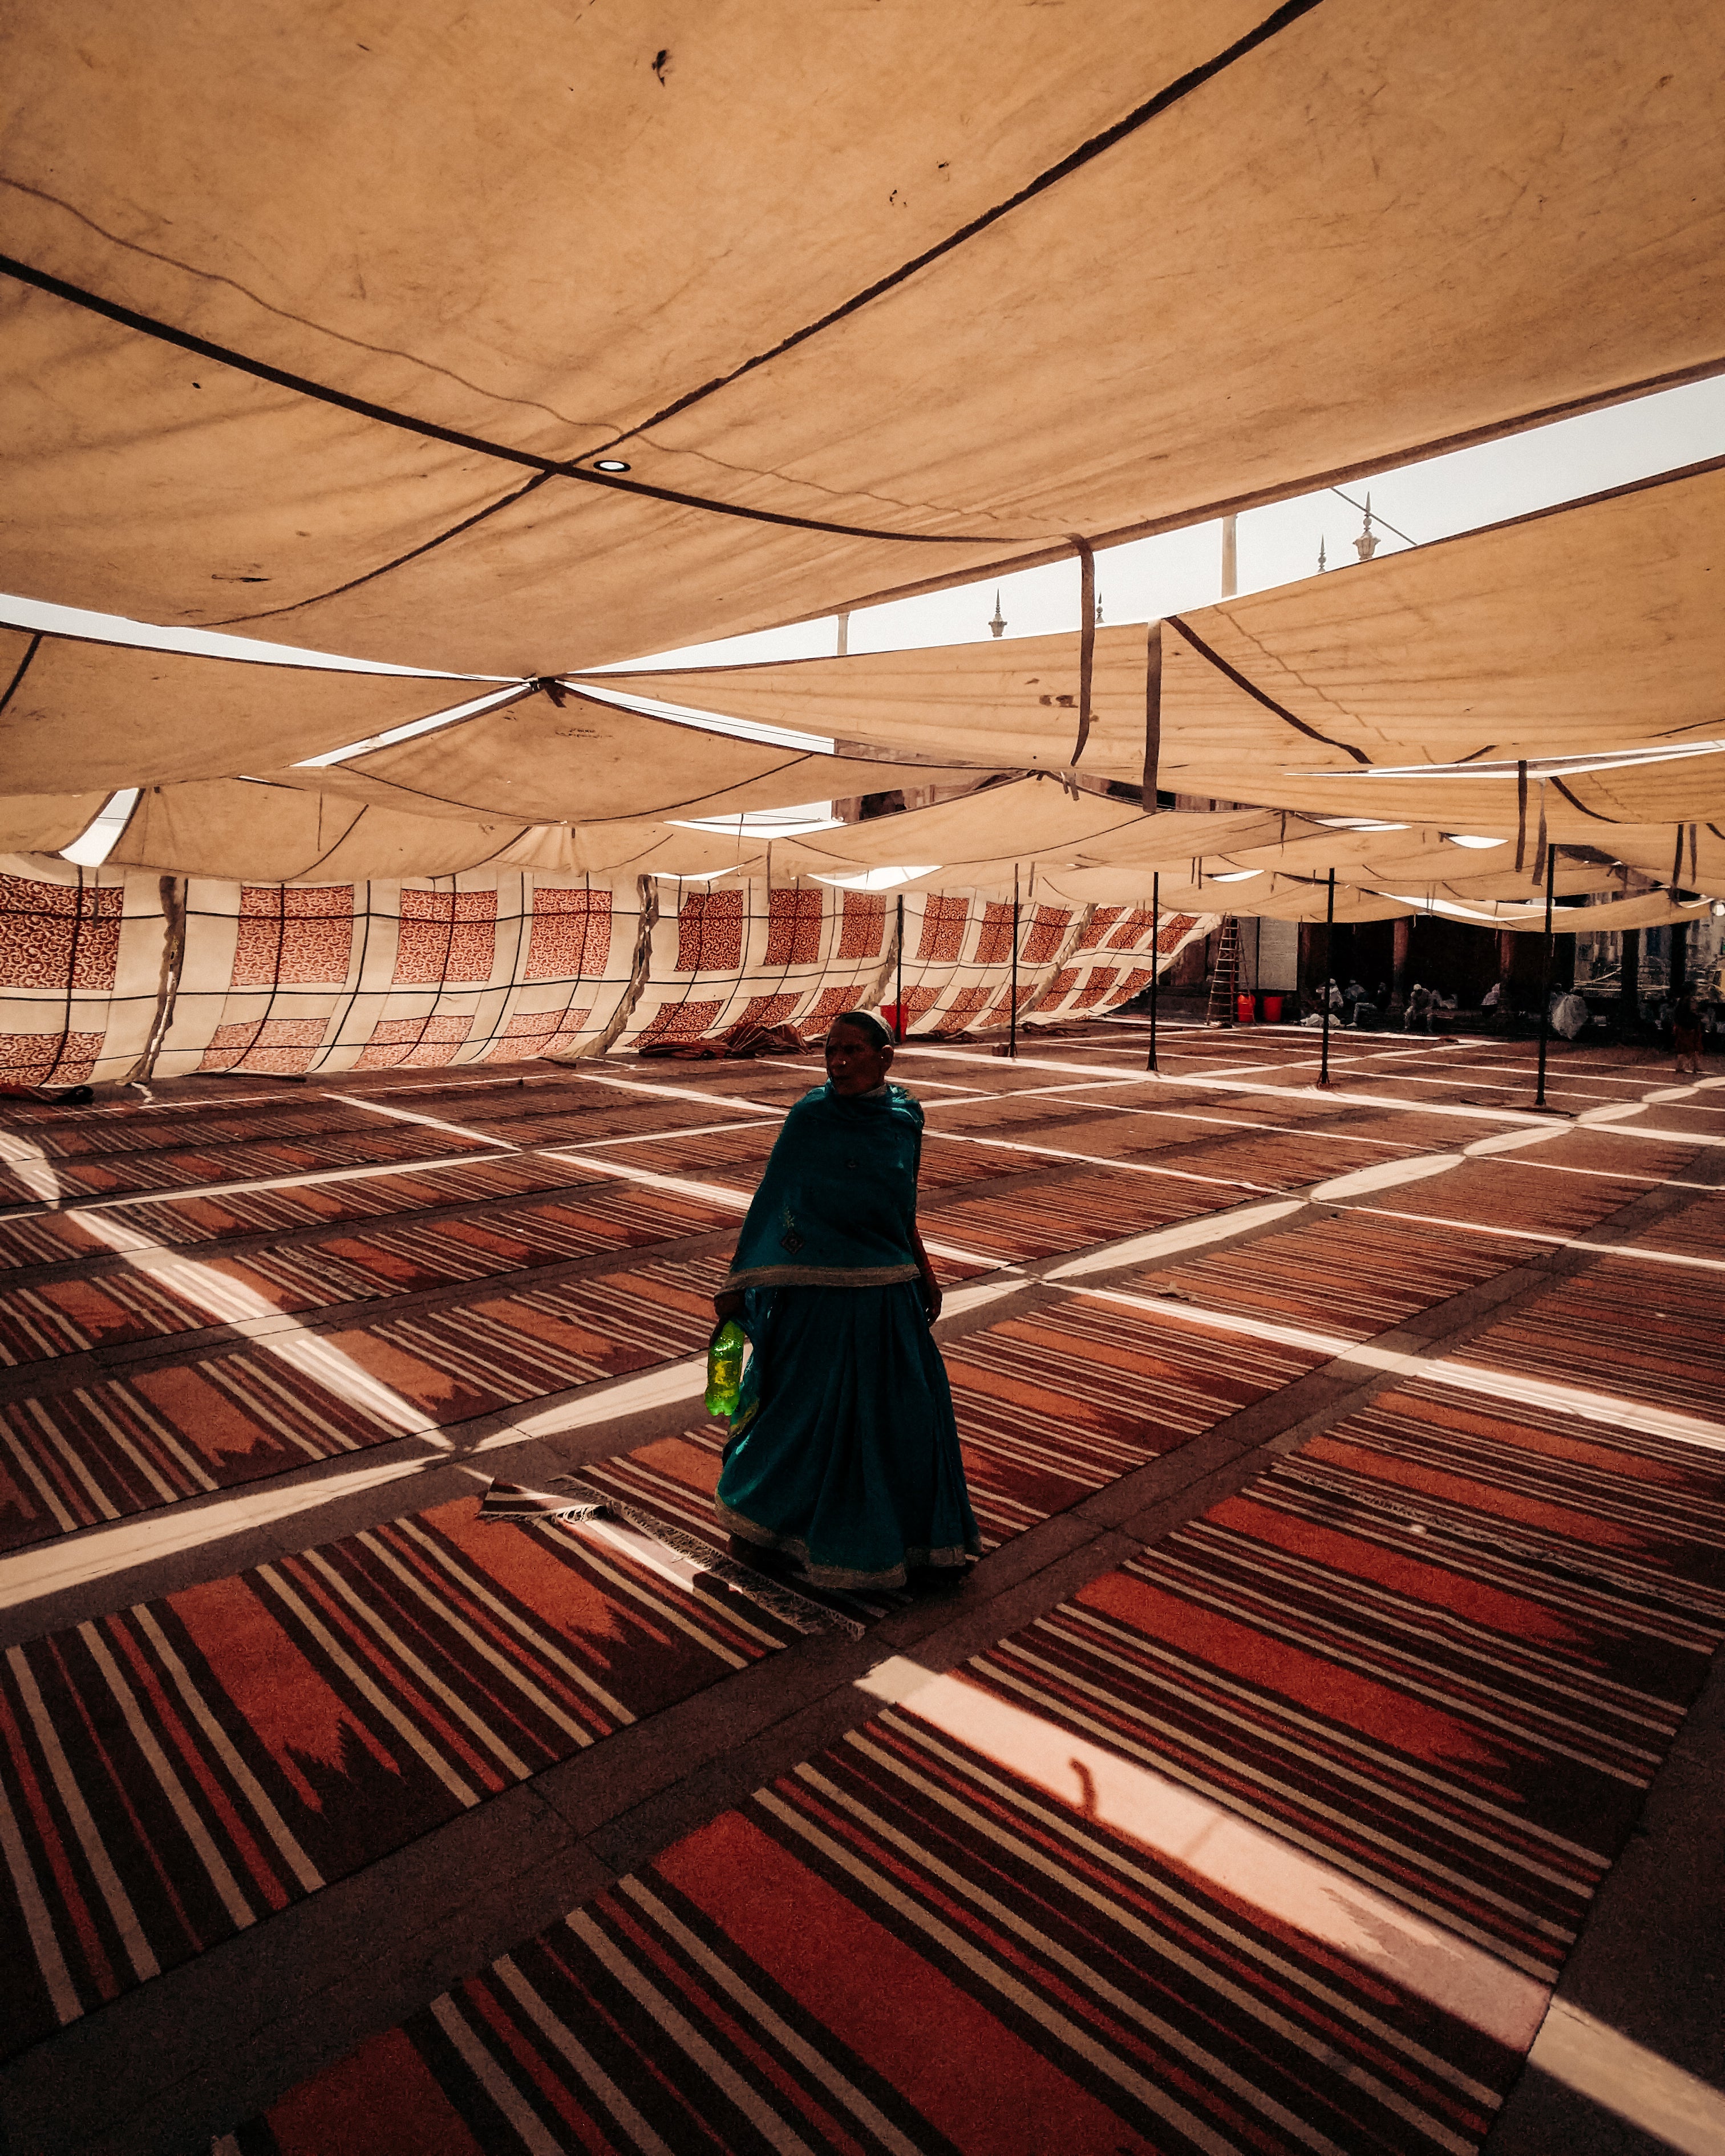 Handmade Rug Making Process, Turkish, Persian, Iranian Rugs and Kilims in a Yurt, Yoruk (nomad) tent.